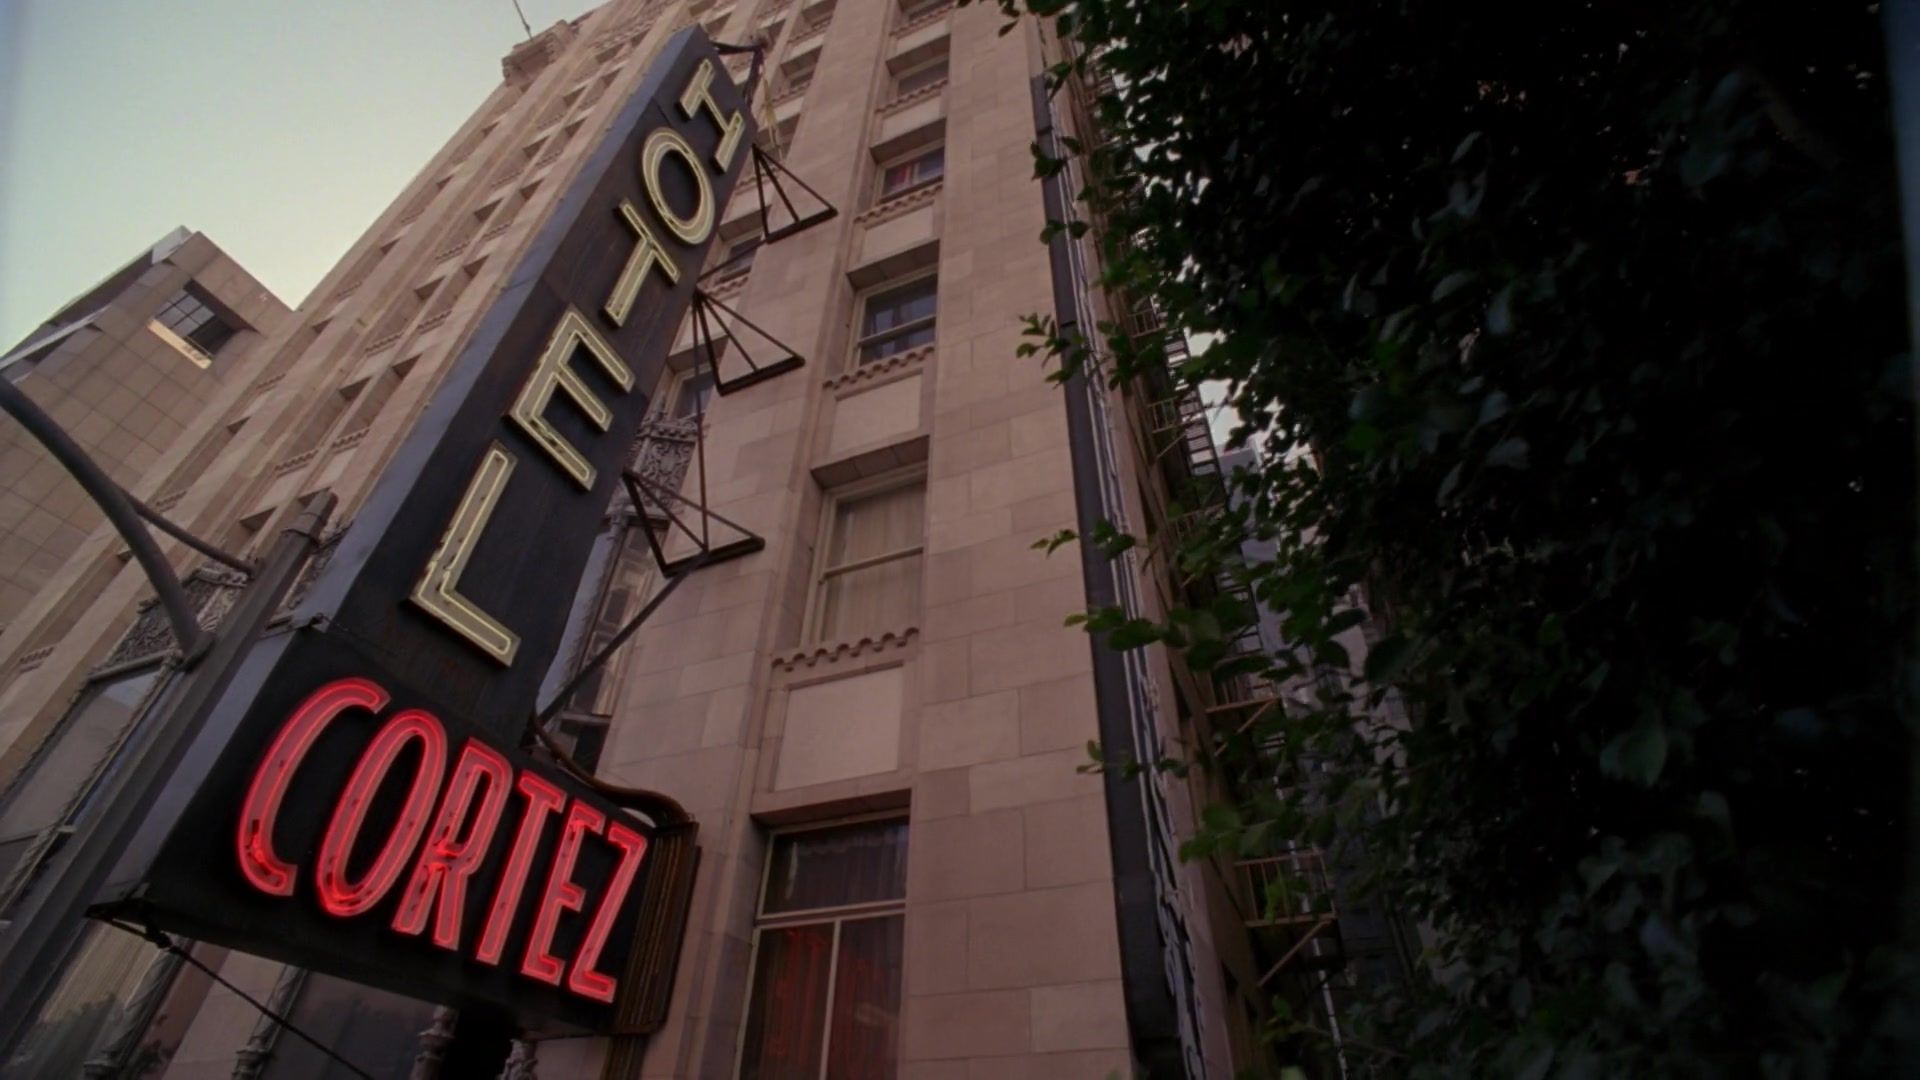 Hotel Cortez. American Horror Story